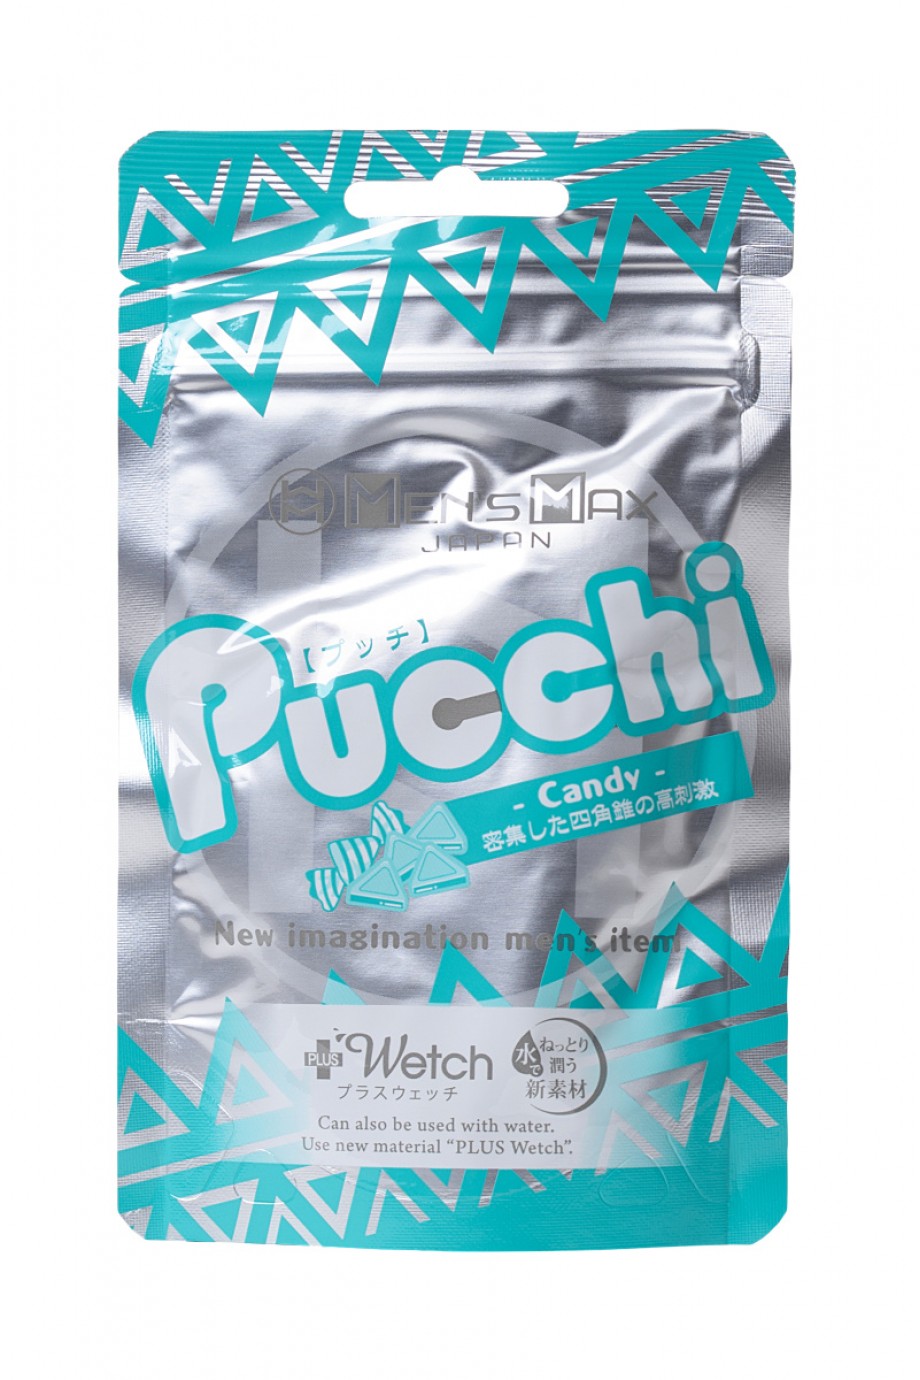 MensMax Pucchi Candy